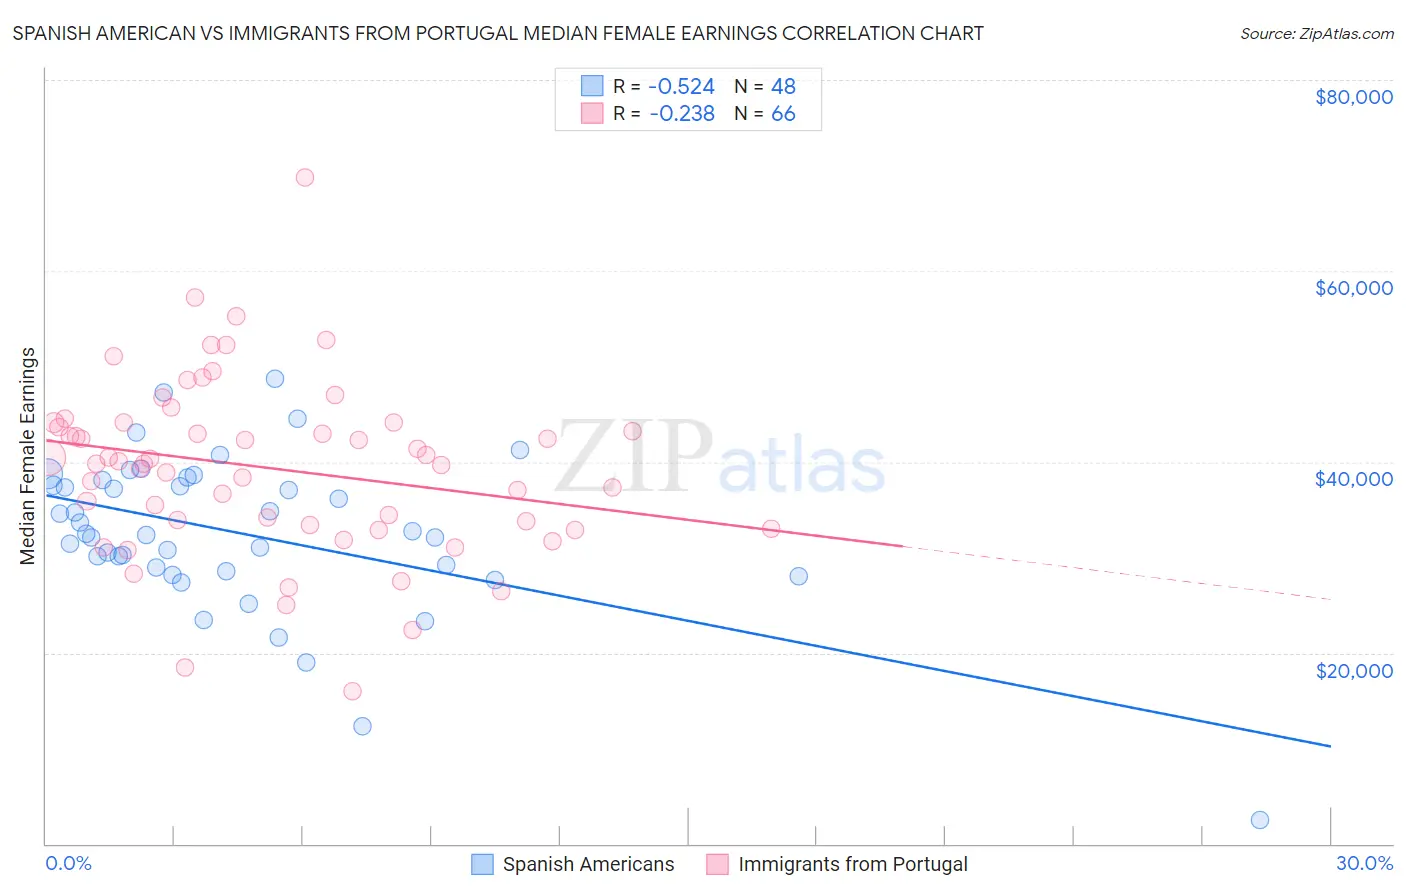 Spanish American vs Immigrants from Portugal Median Female Earnings